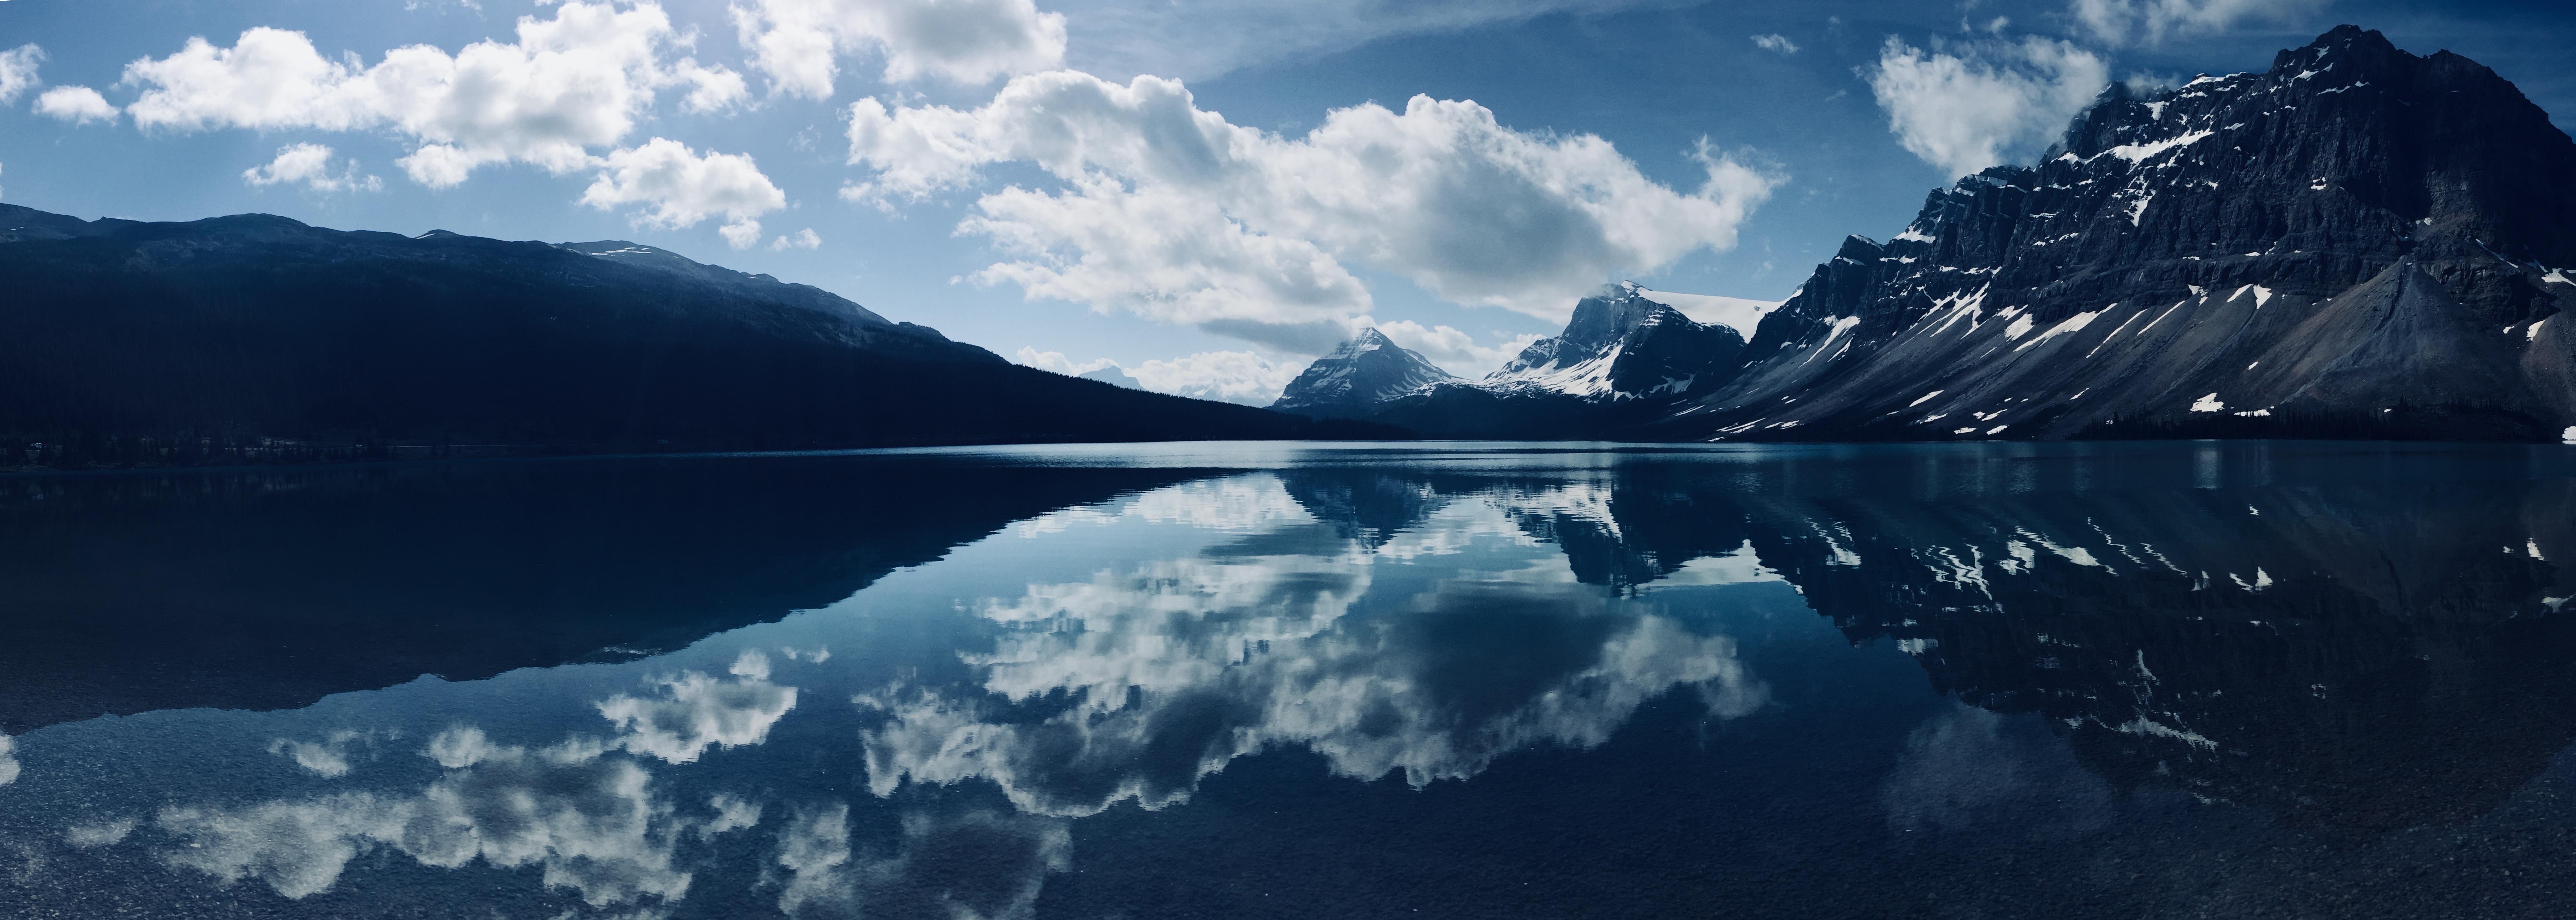 Banff National Park Wallpapers HD  PixelsTalkNet